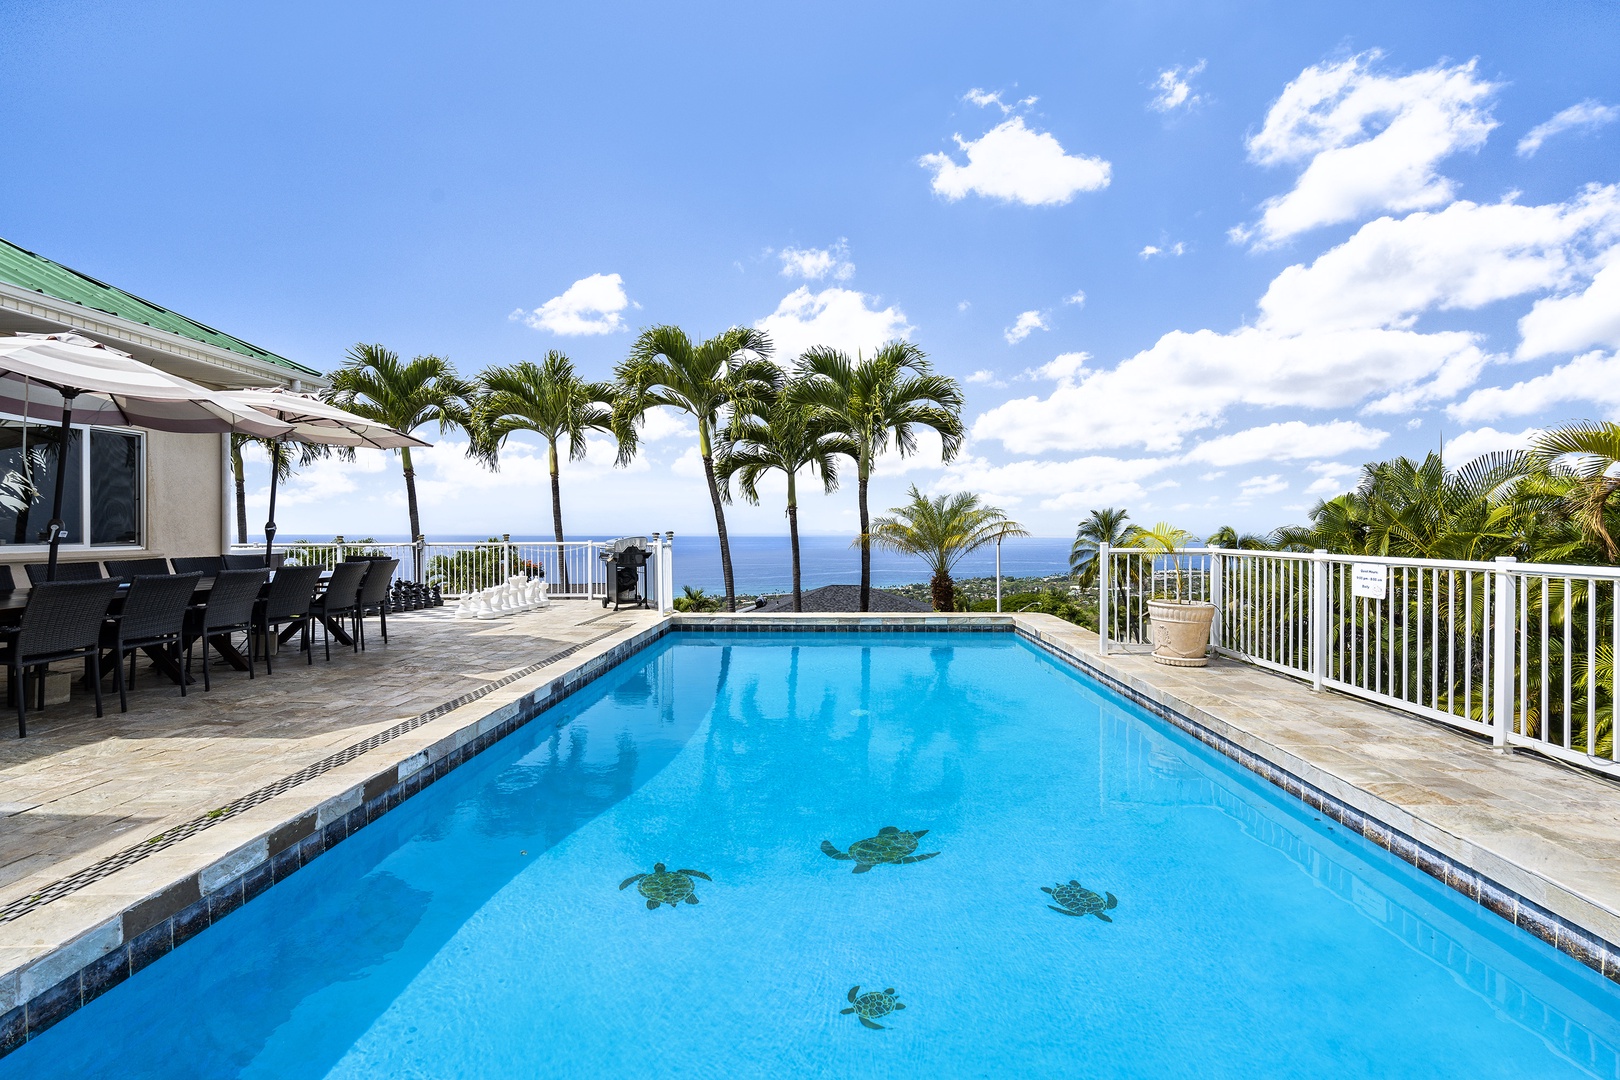 Kailua-Kona Vacation Rentals, Honu Hale - Large salt water pool for our guests enjoyment!